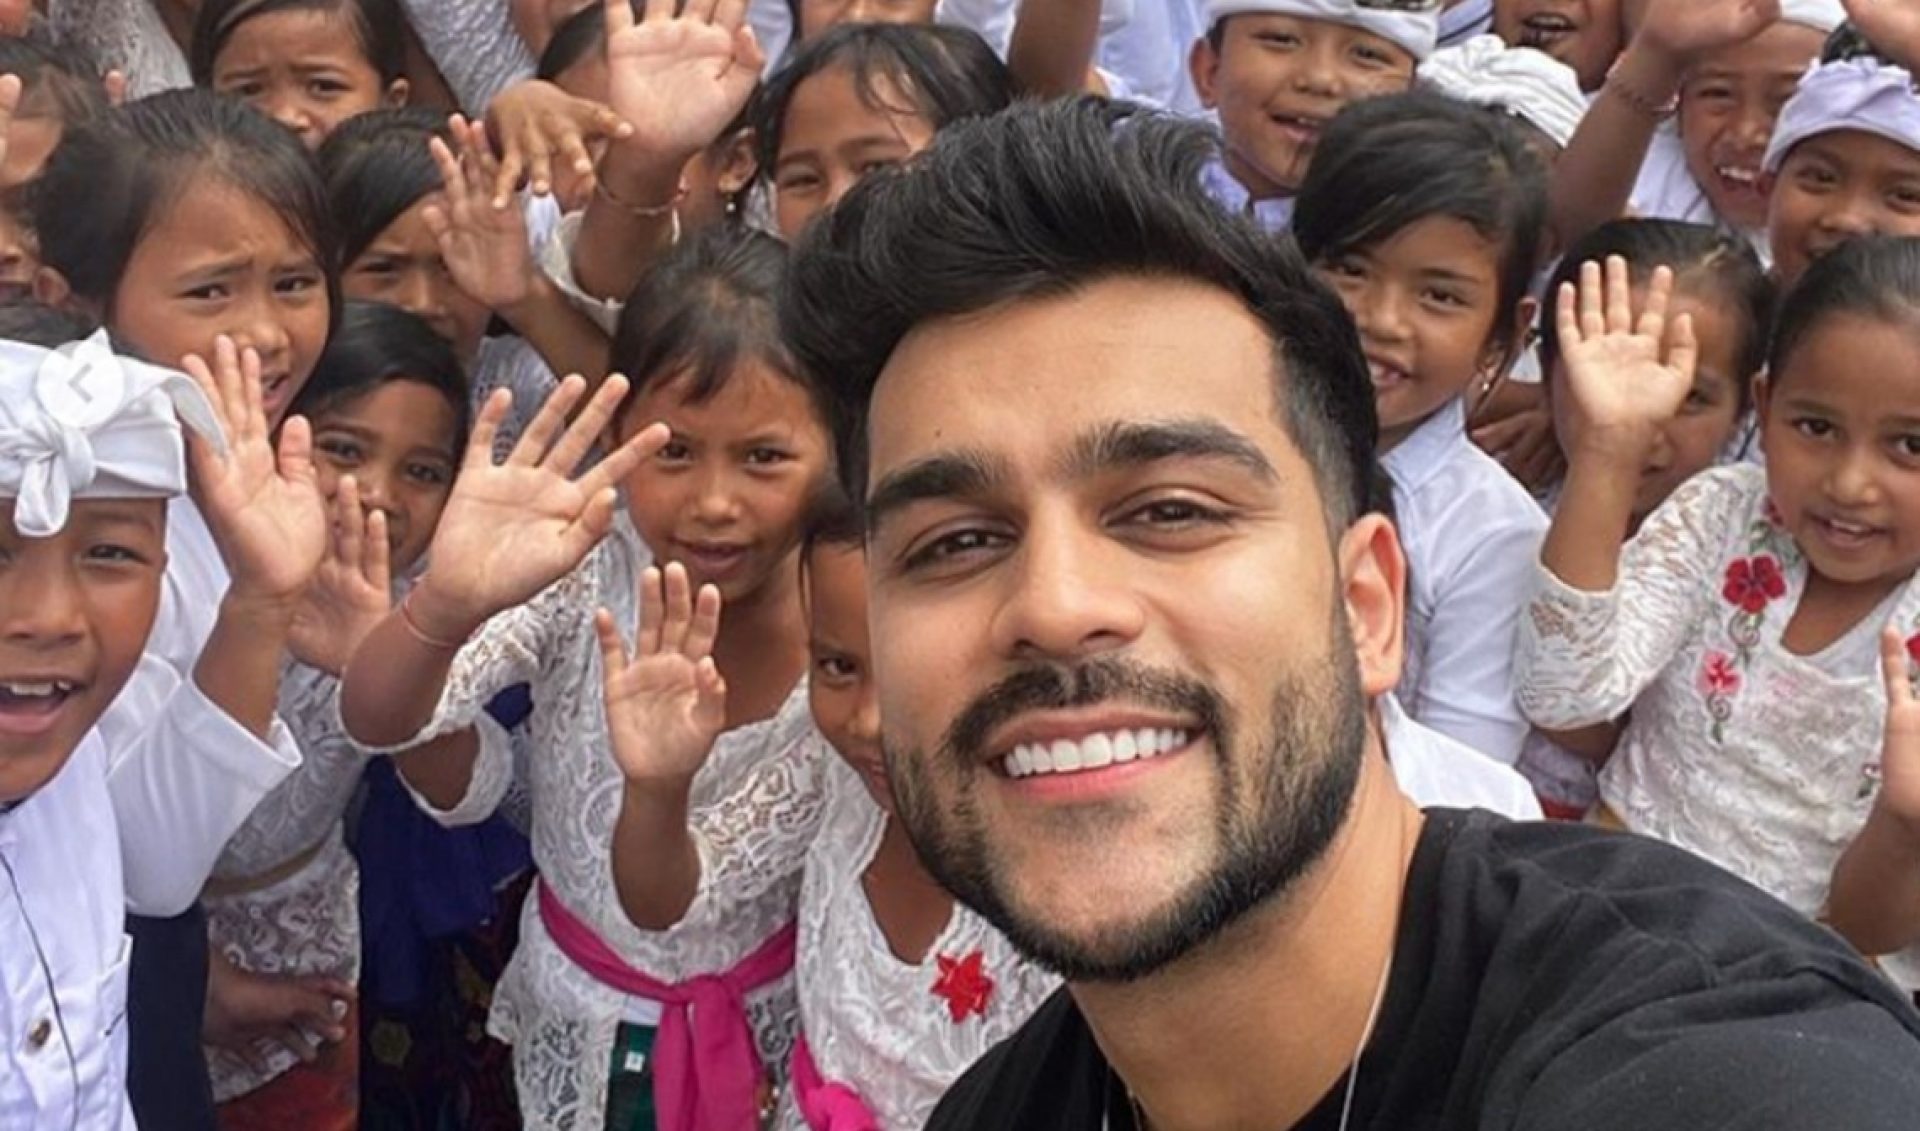 Instagram Comic Adam Waheed And Fans Fund School For Underprivileged Children In Bali